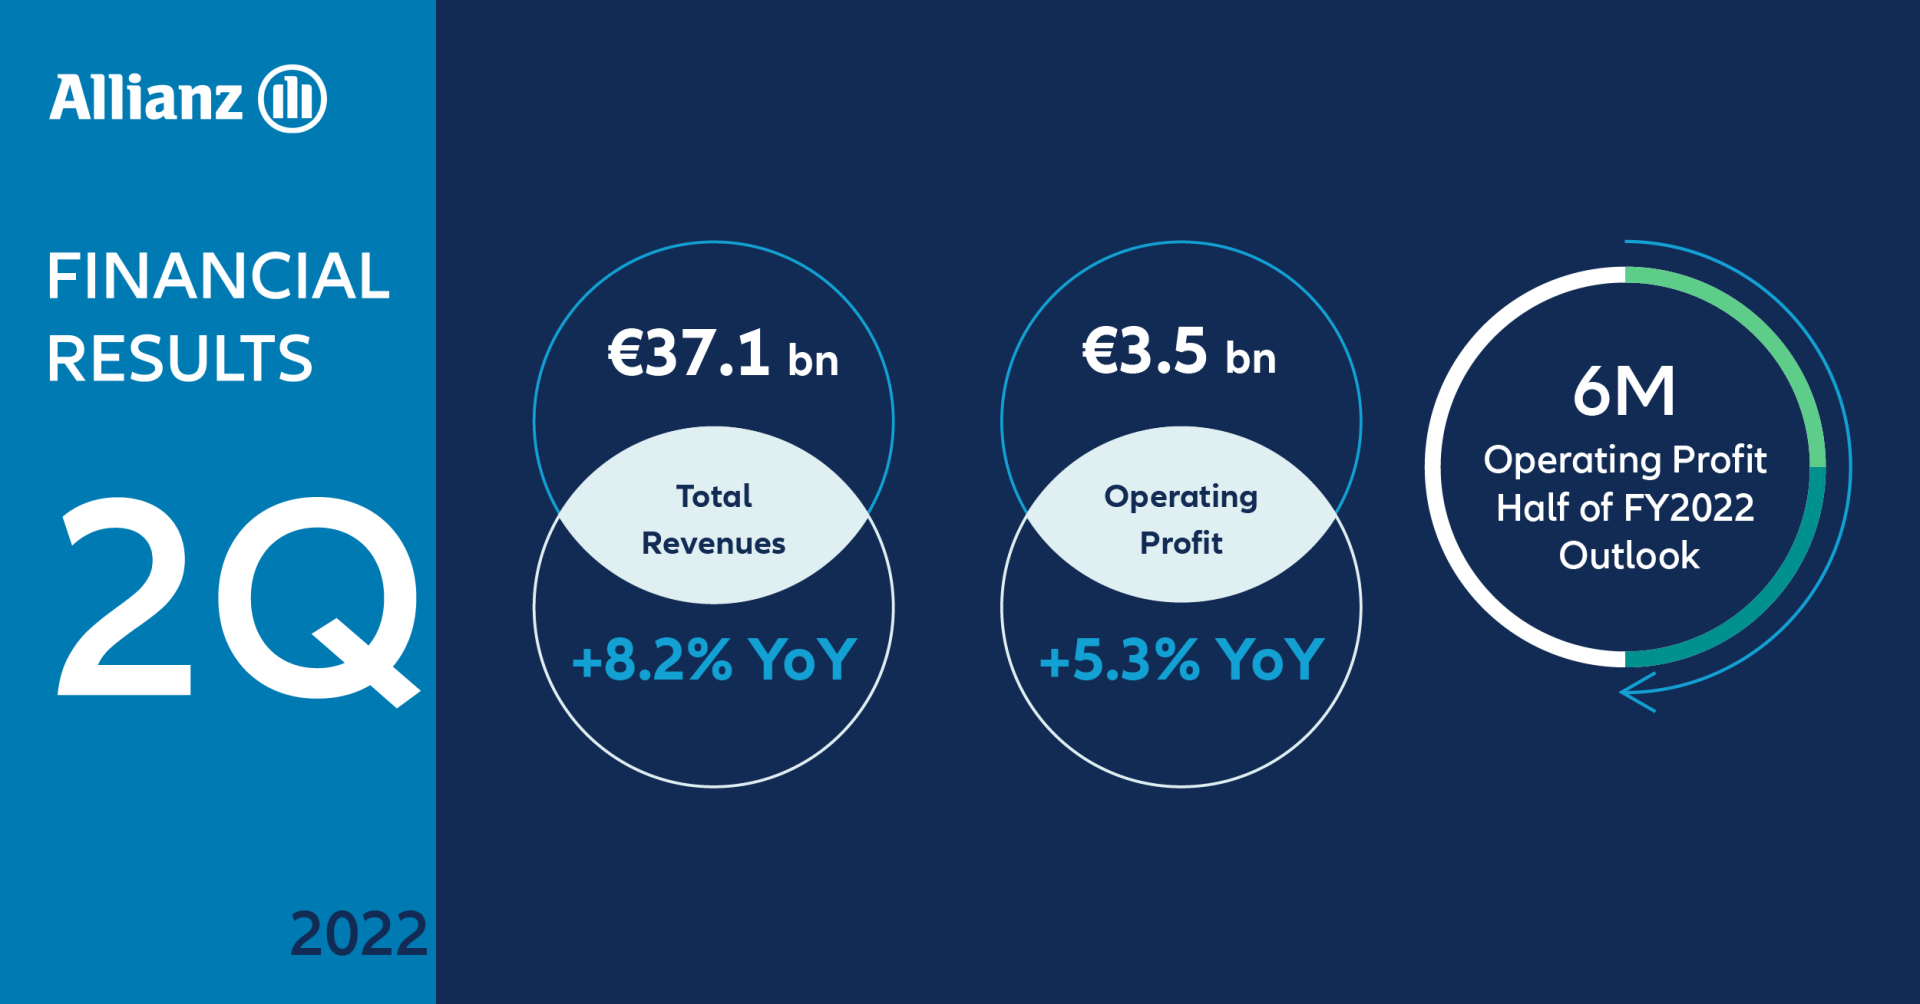 Allianz achieves 3.5 billion euros operating profit in 2Q